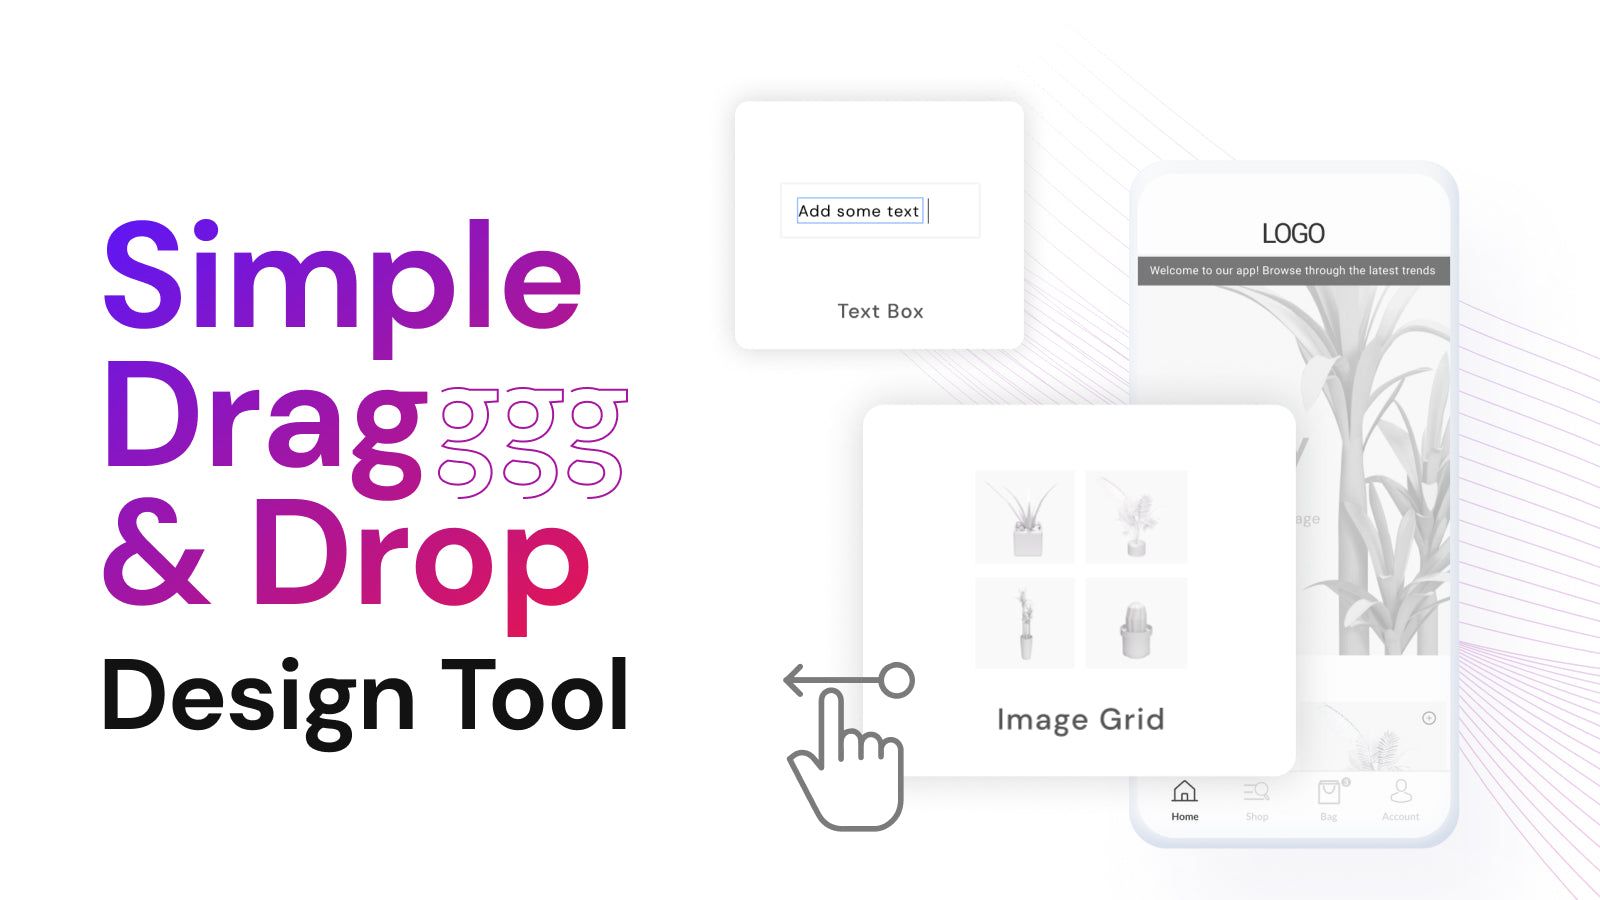 Simple drag & drop design tool